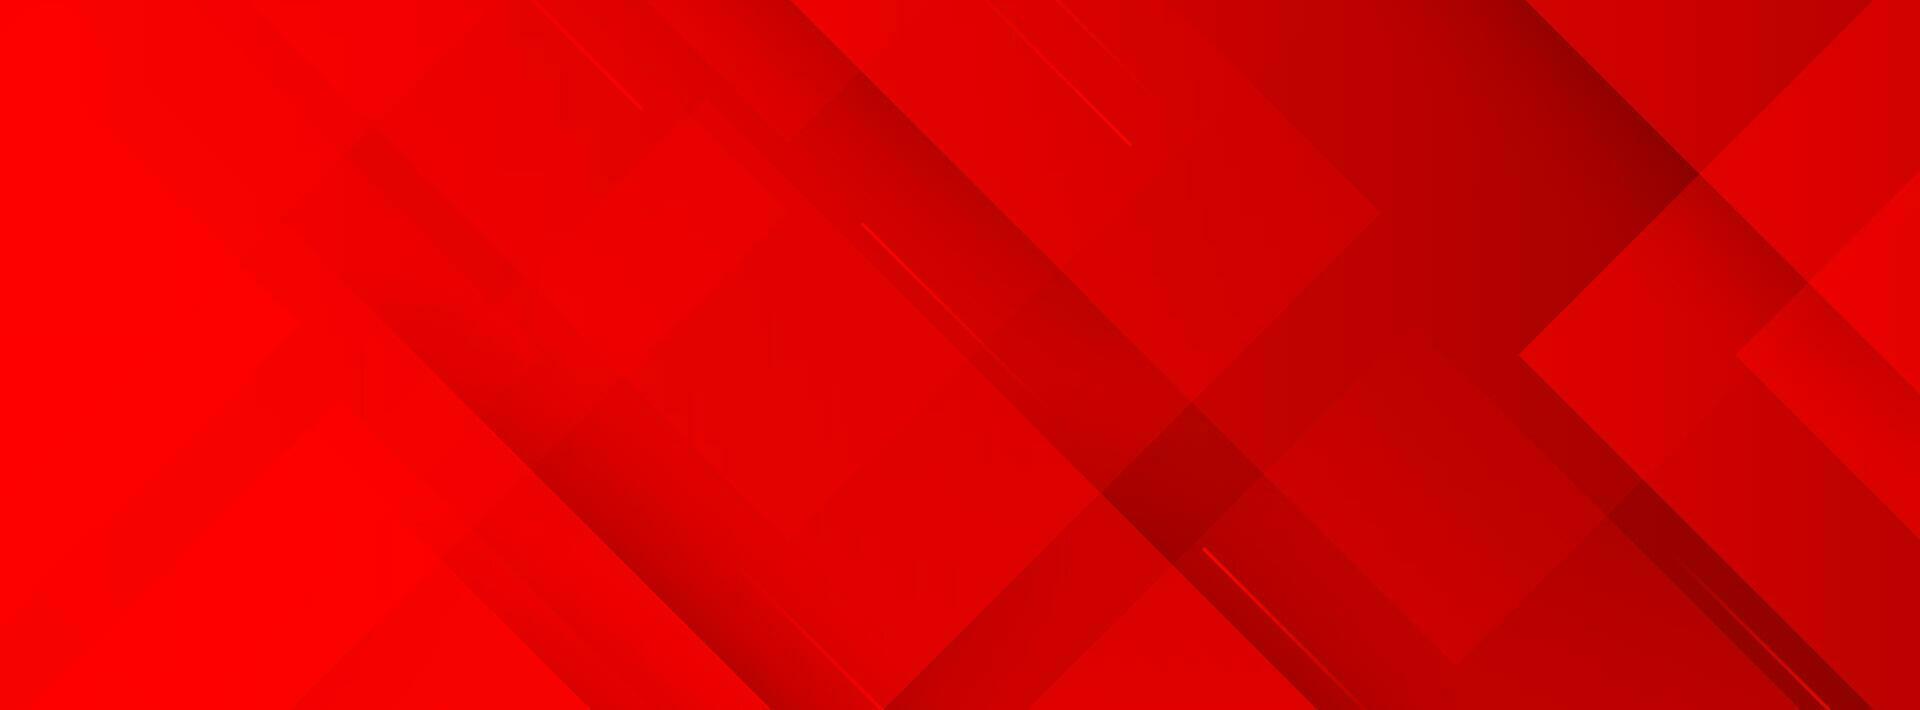 rood abstract achtergrond. schuine streep effect stijl vector